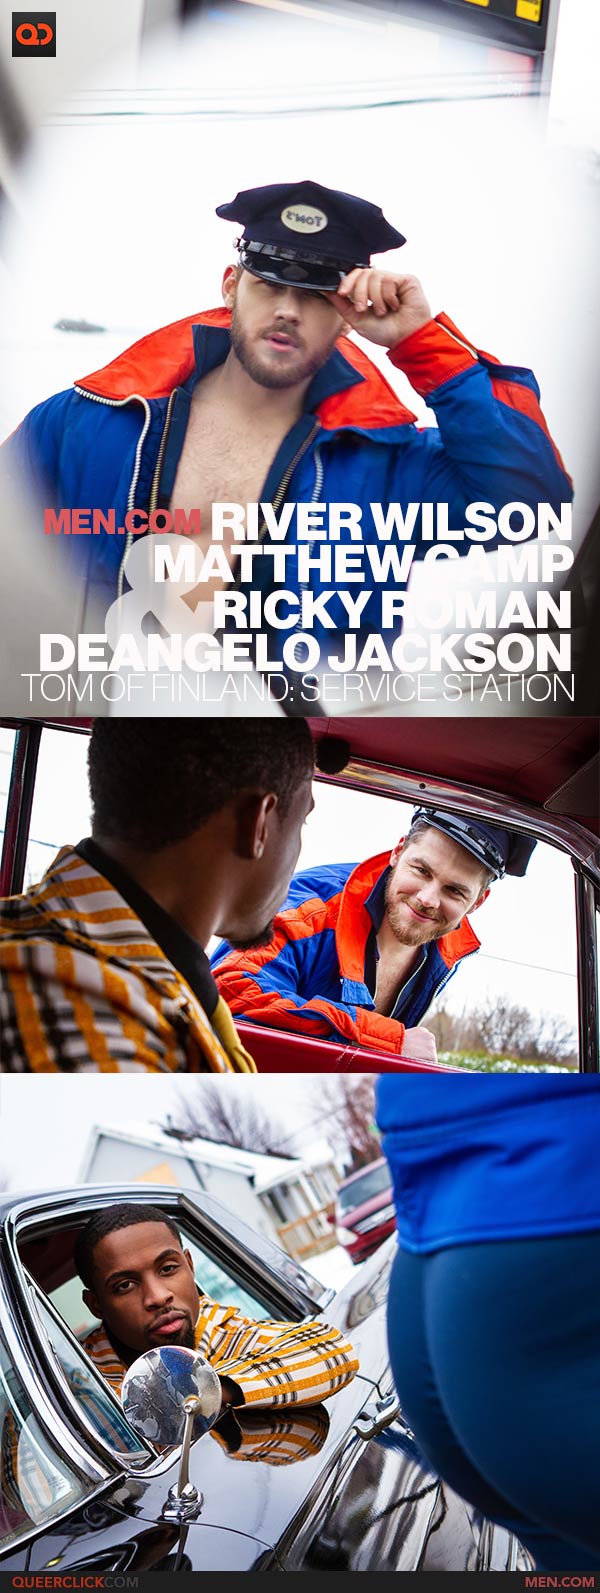 Men.com: Tom Of Finland: Service Station - River Wilson, Ricky Roman, Matthew Camp and DeAngelo Jackson